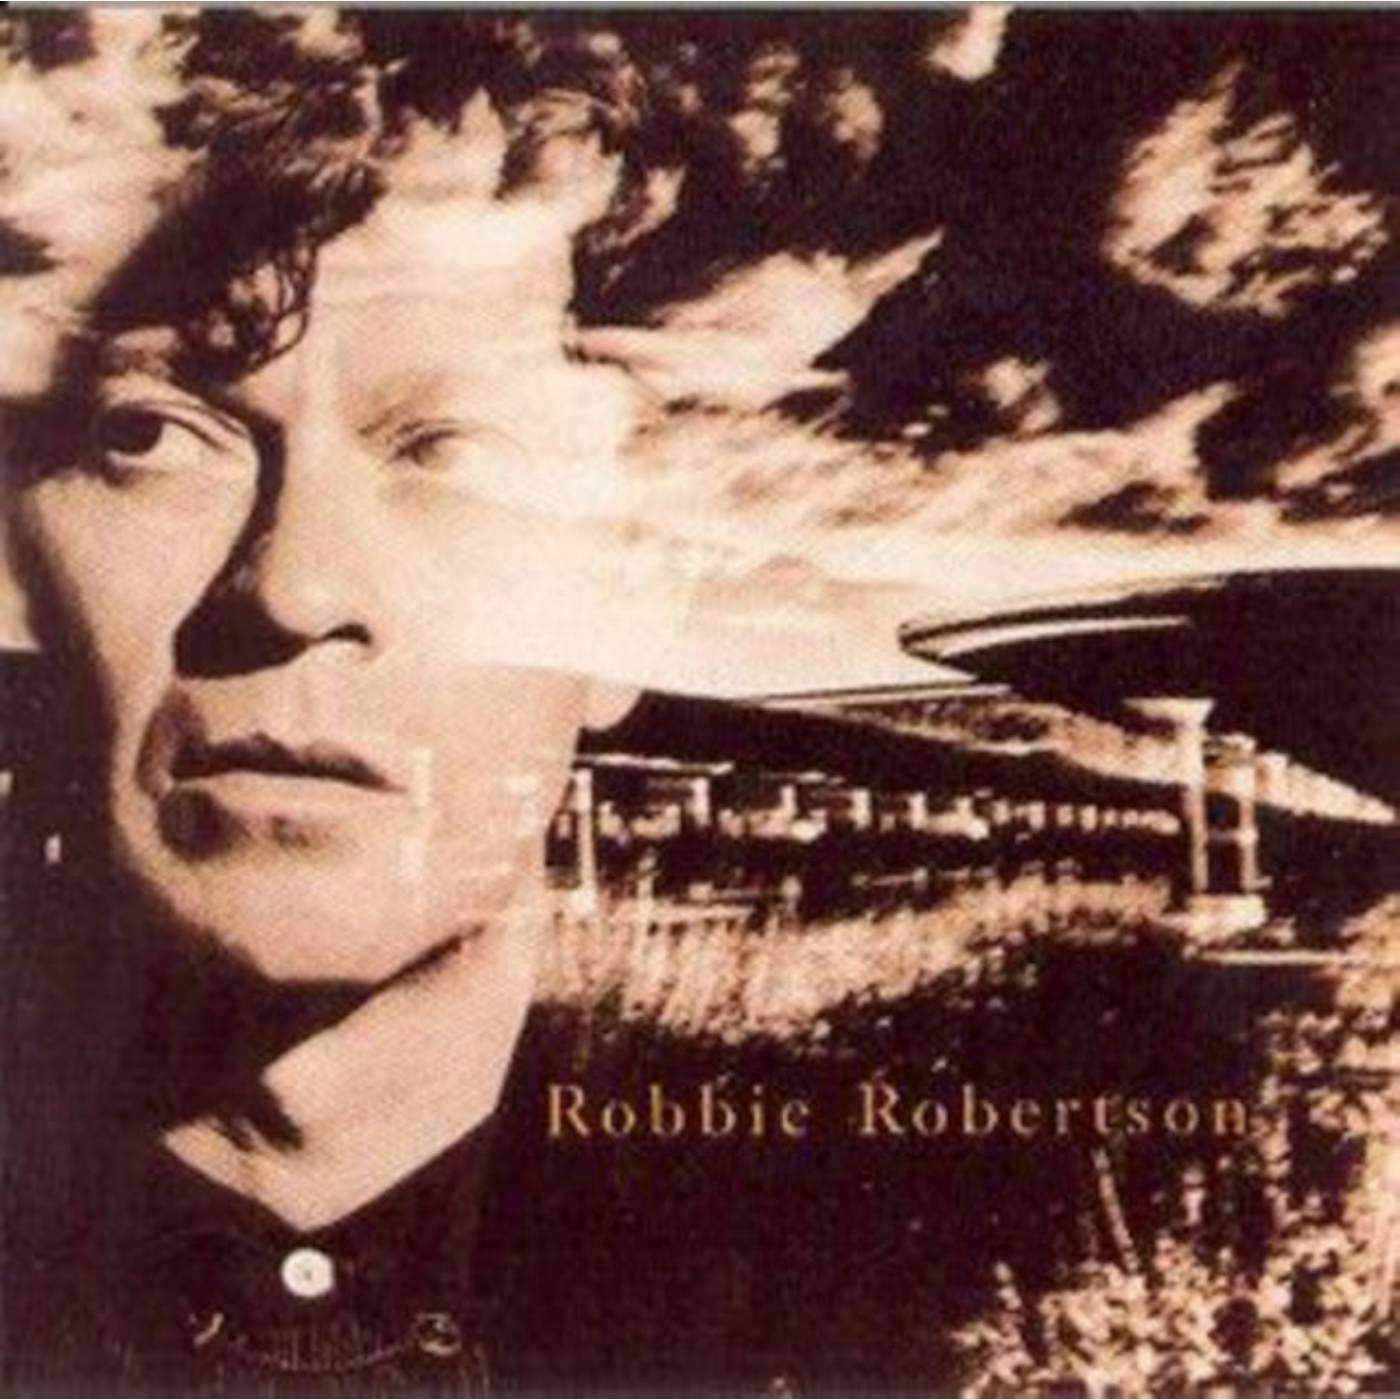 Robbie Robertson CD - Robbie Robertson